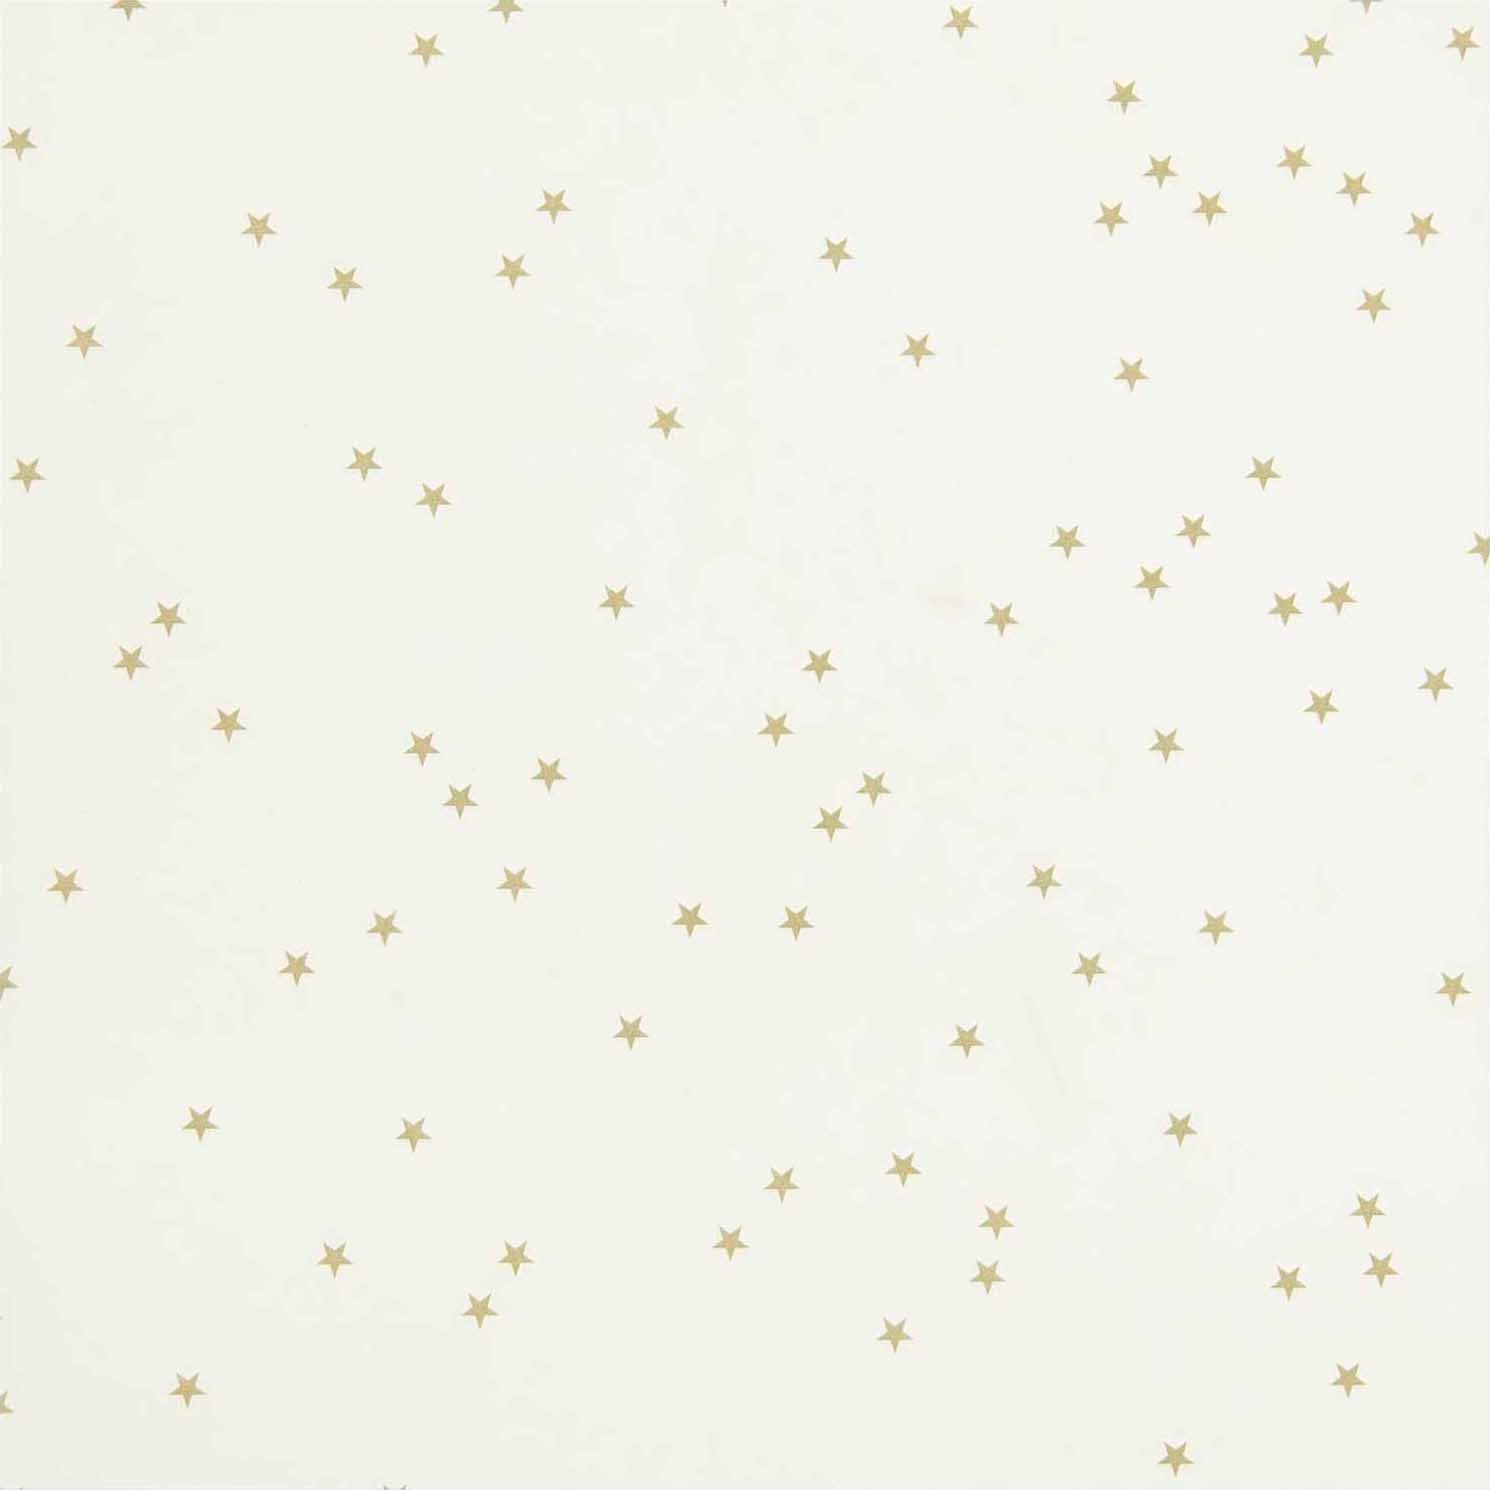 Rico Goldsterne, Kraftpapier 130 Blatt, Design 15x15 cm, Weiß 32 g/qm